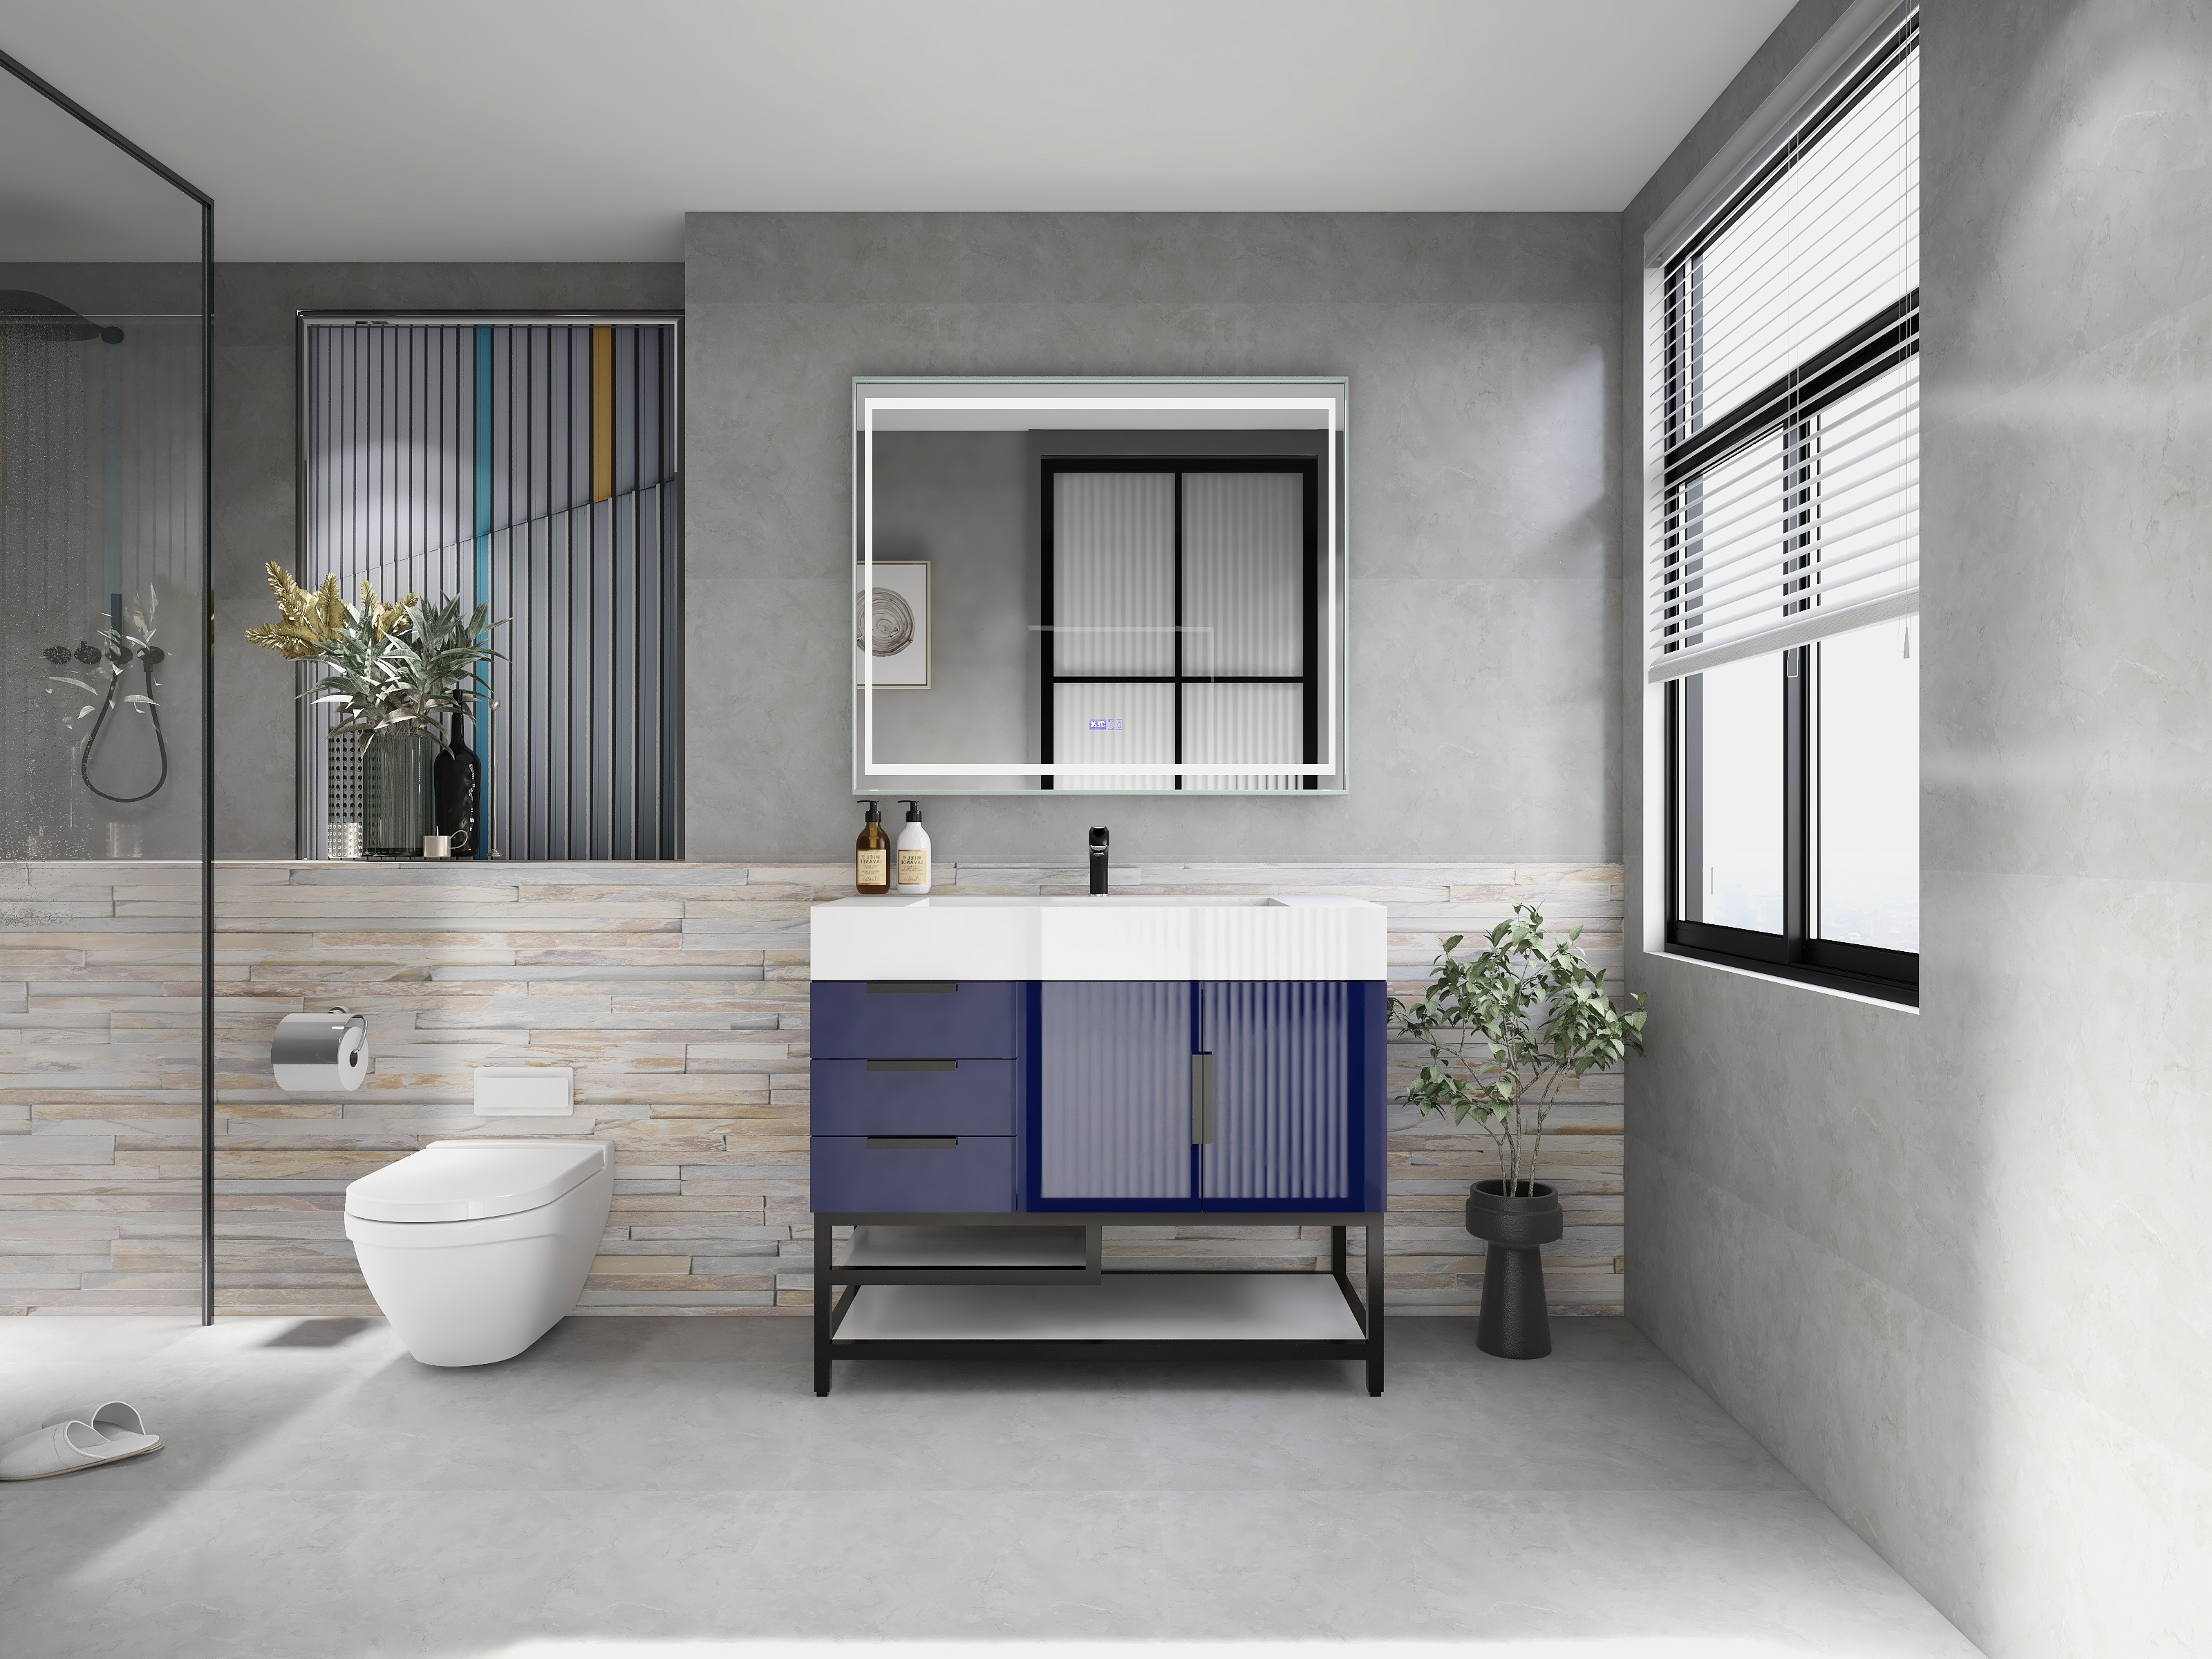 Bethany 42" Freestanding Bathroom Vanity with Reinforced Acrylic Sink in Night Blue Gloss with Black Handles | Better Vanity Bath Vanities